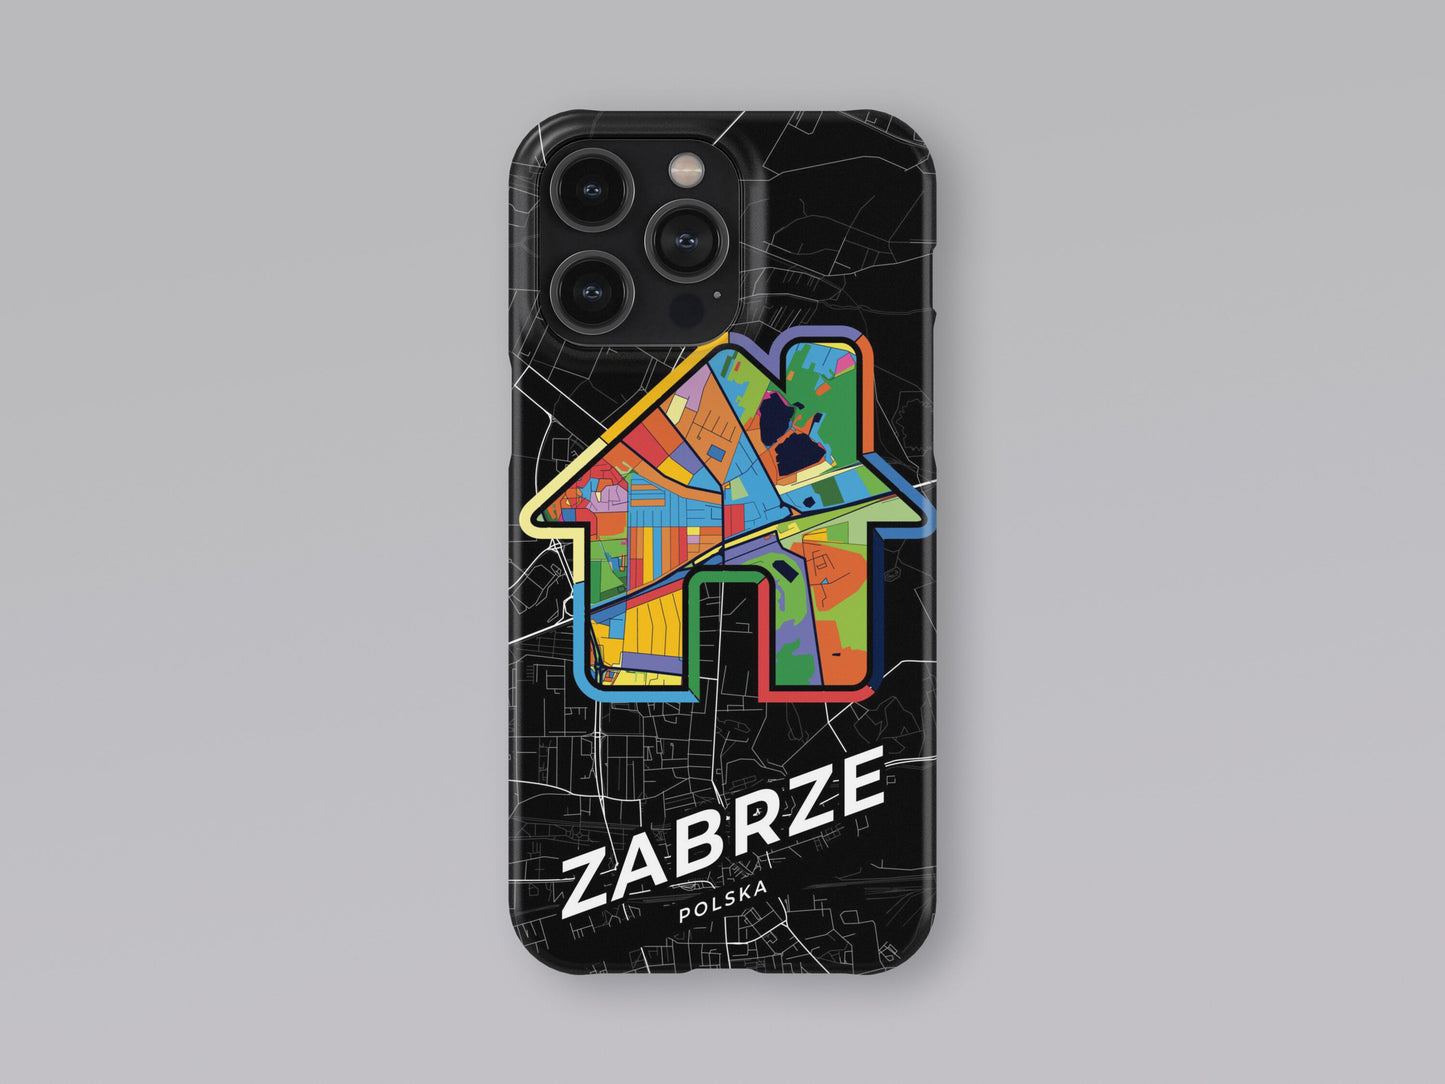 Zabrze Poland slim phone case with colorful icon 3